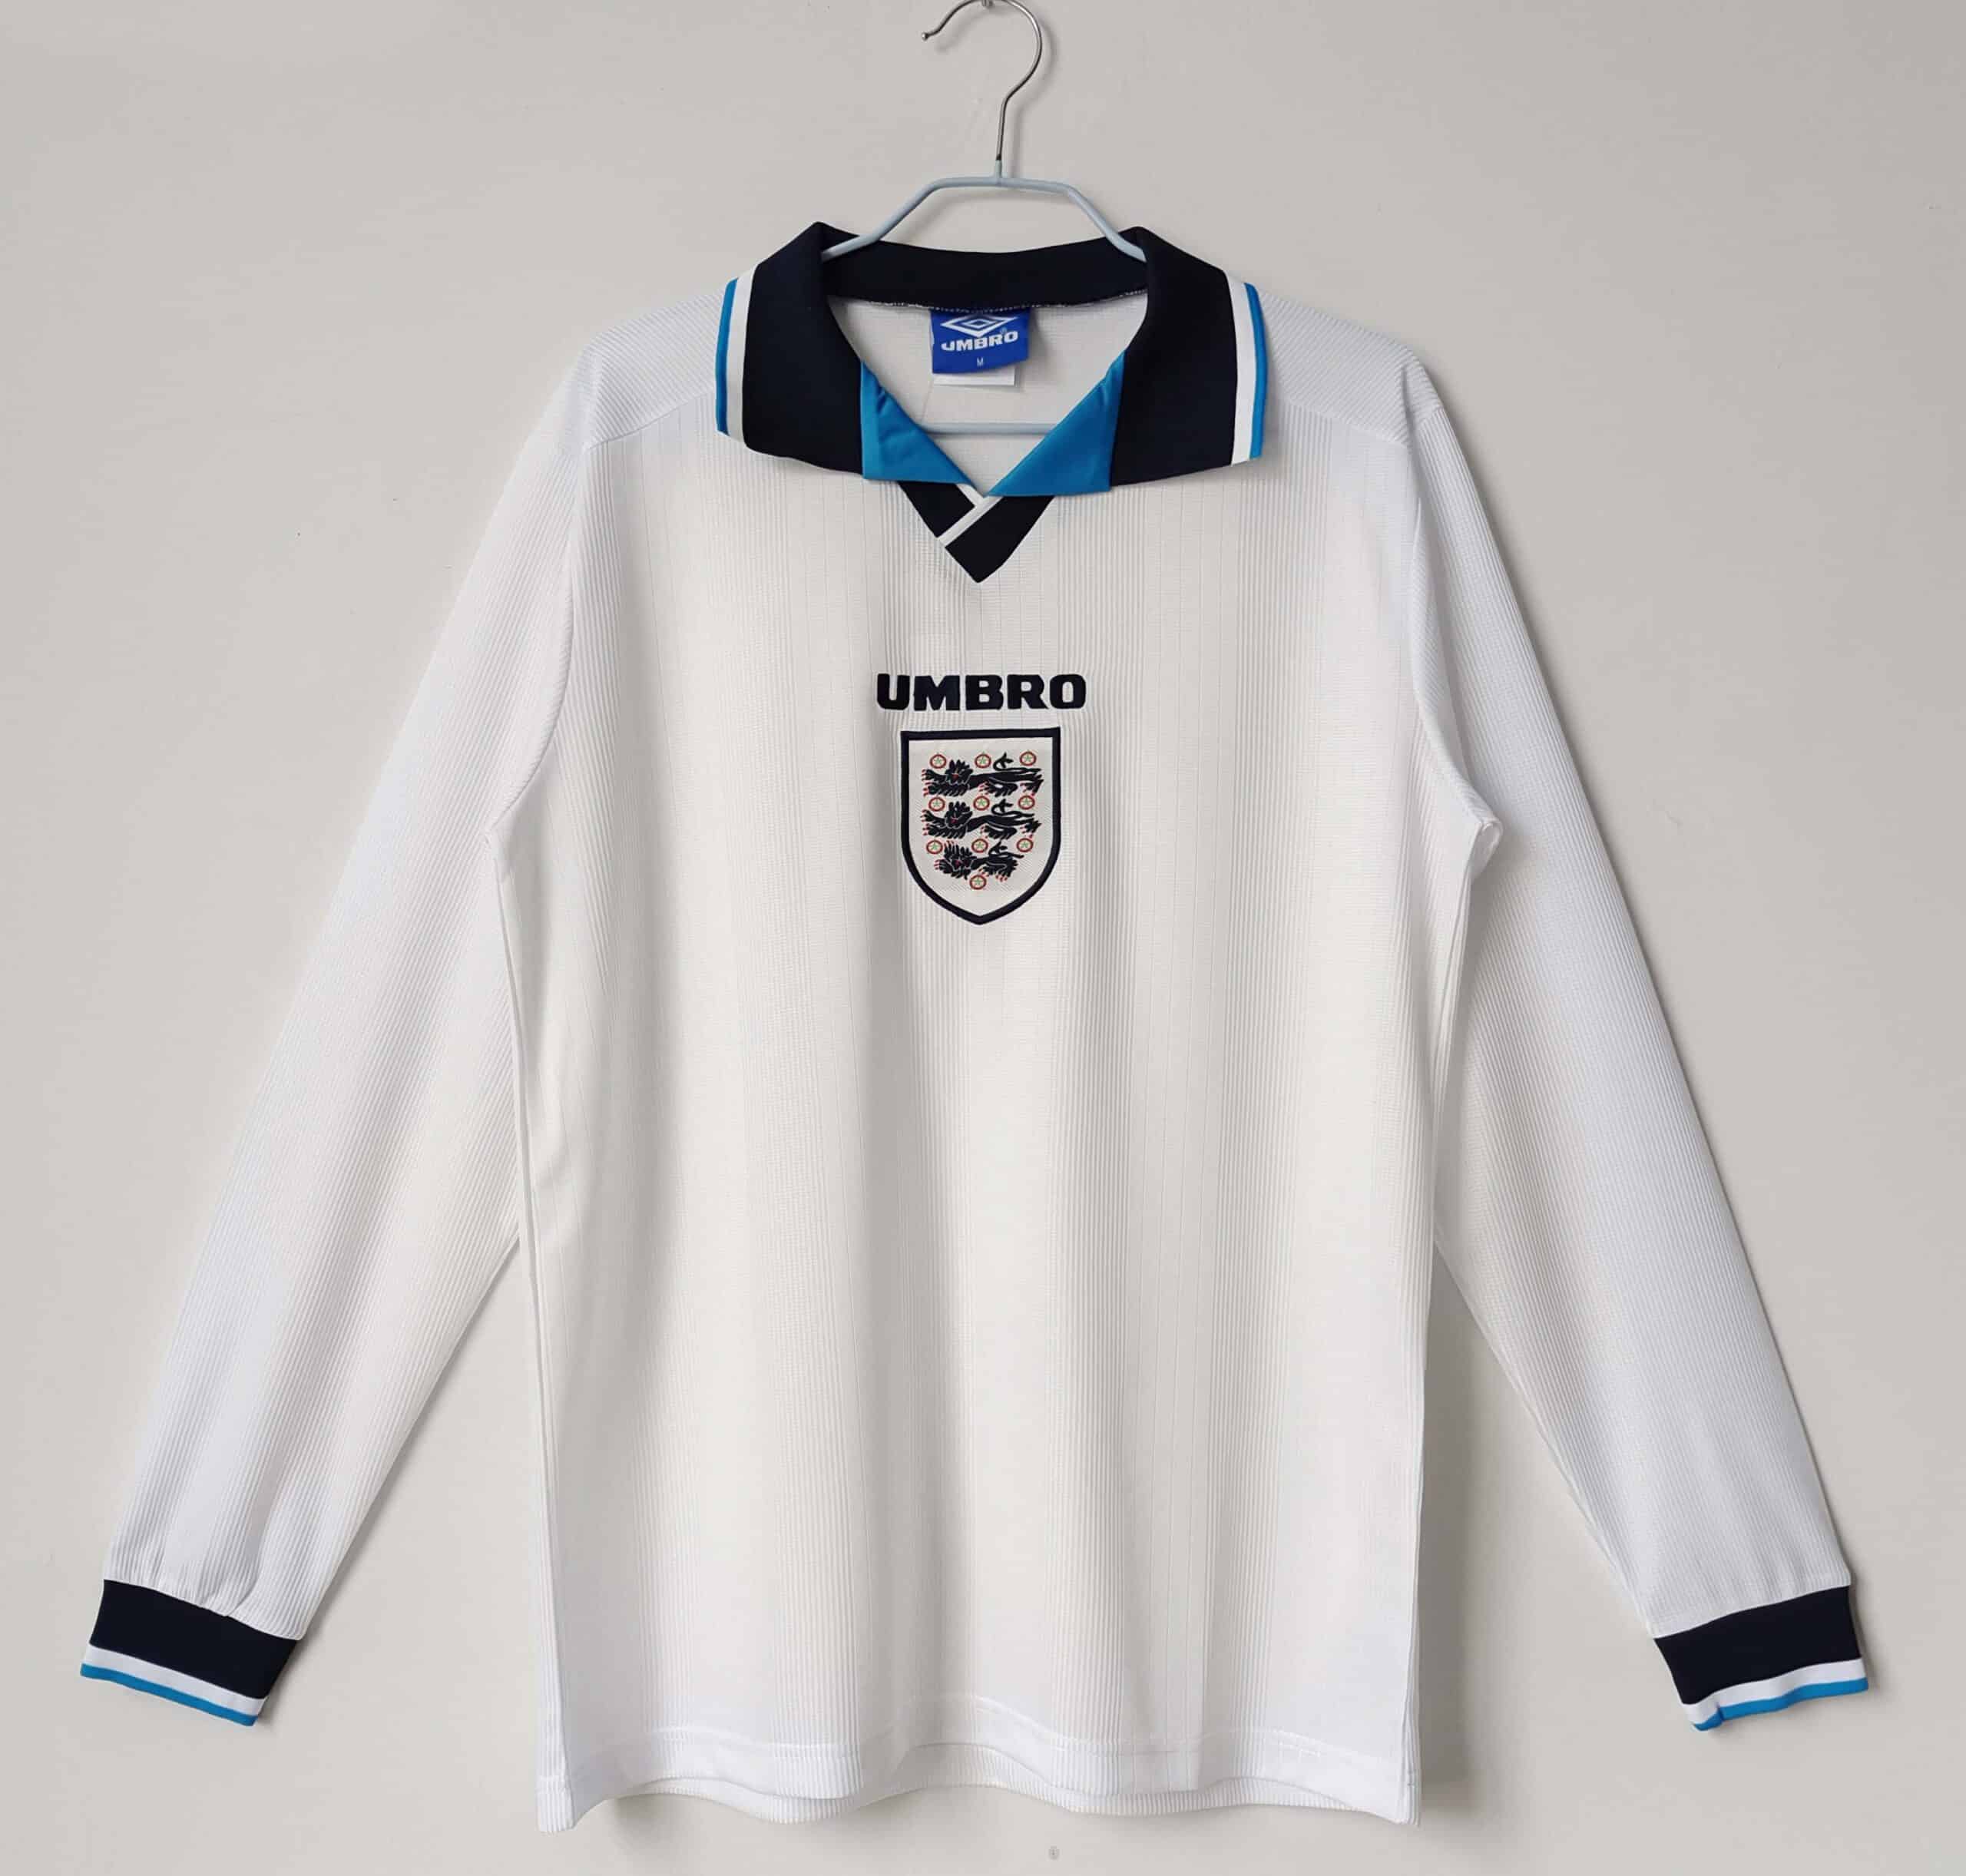 Inglaterra 1996 Camiseta Fútbol Retro